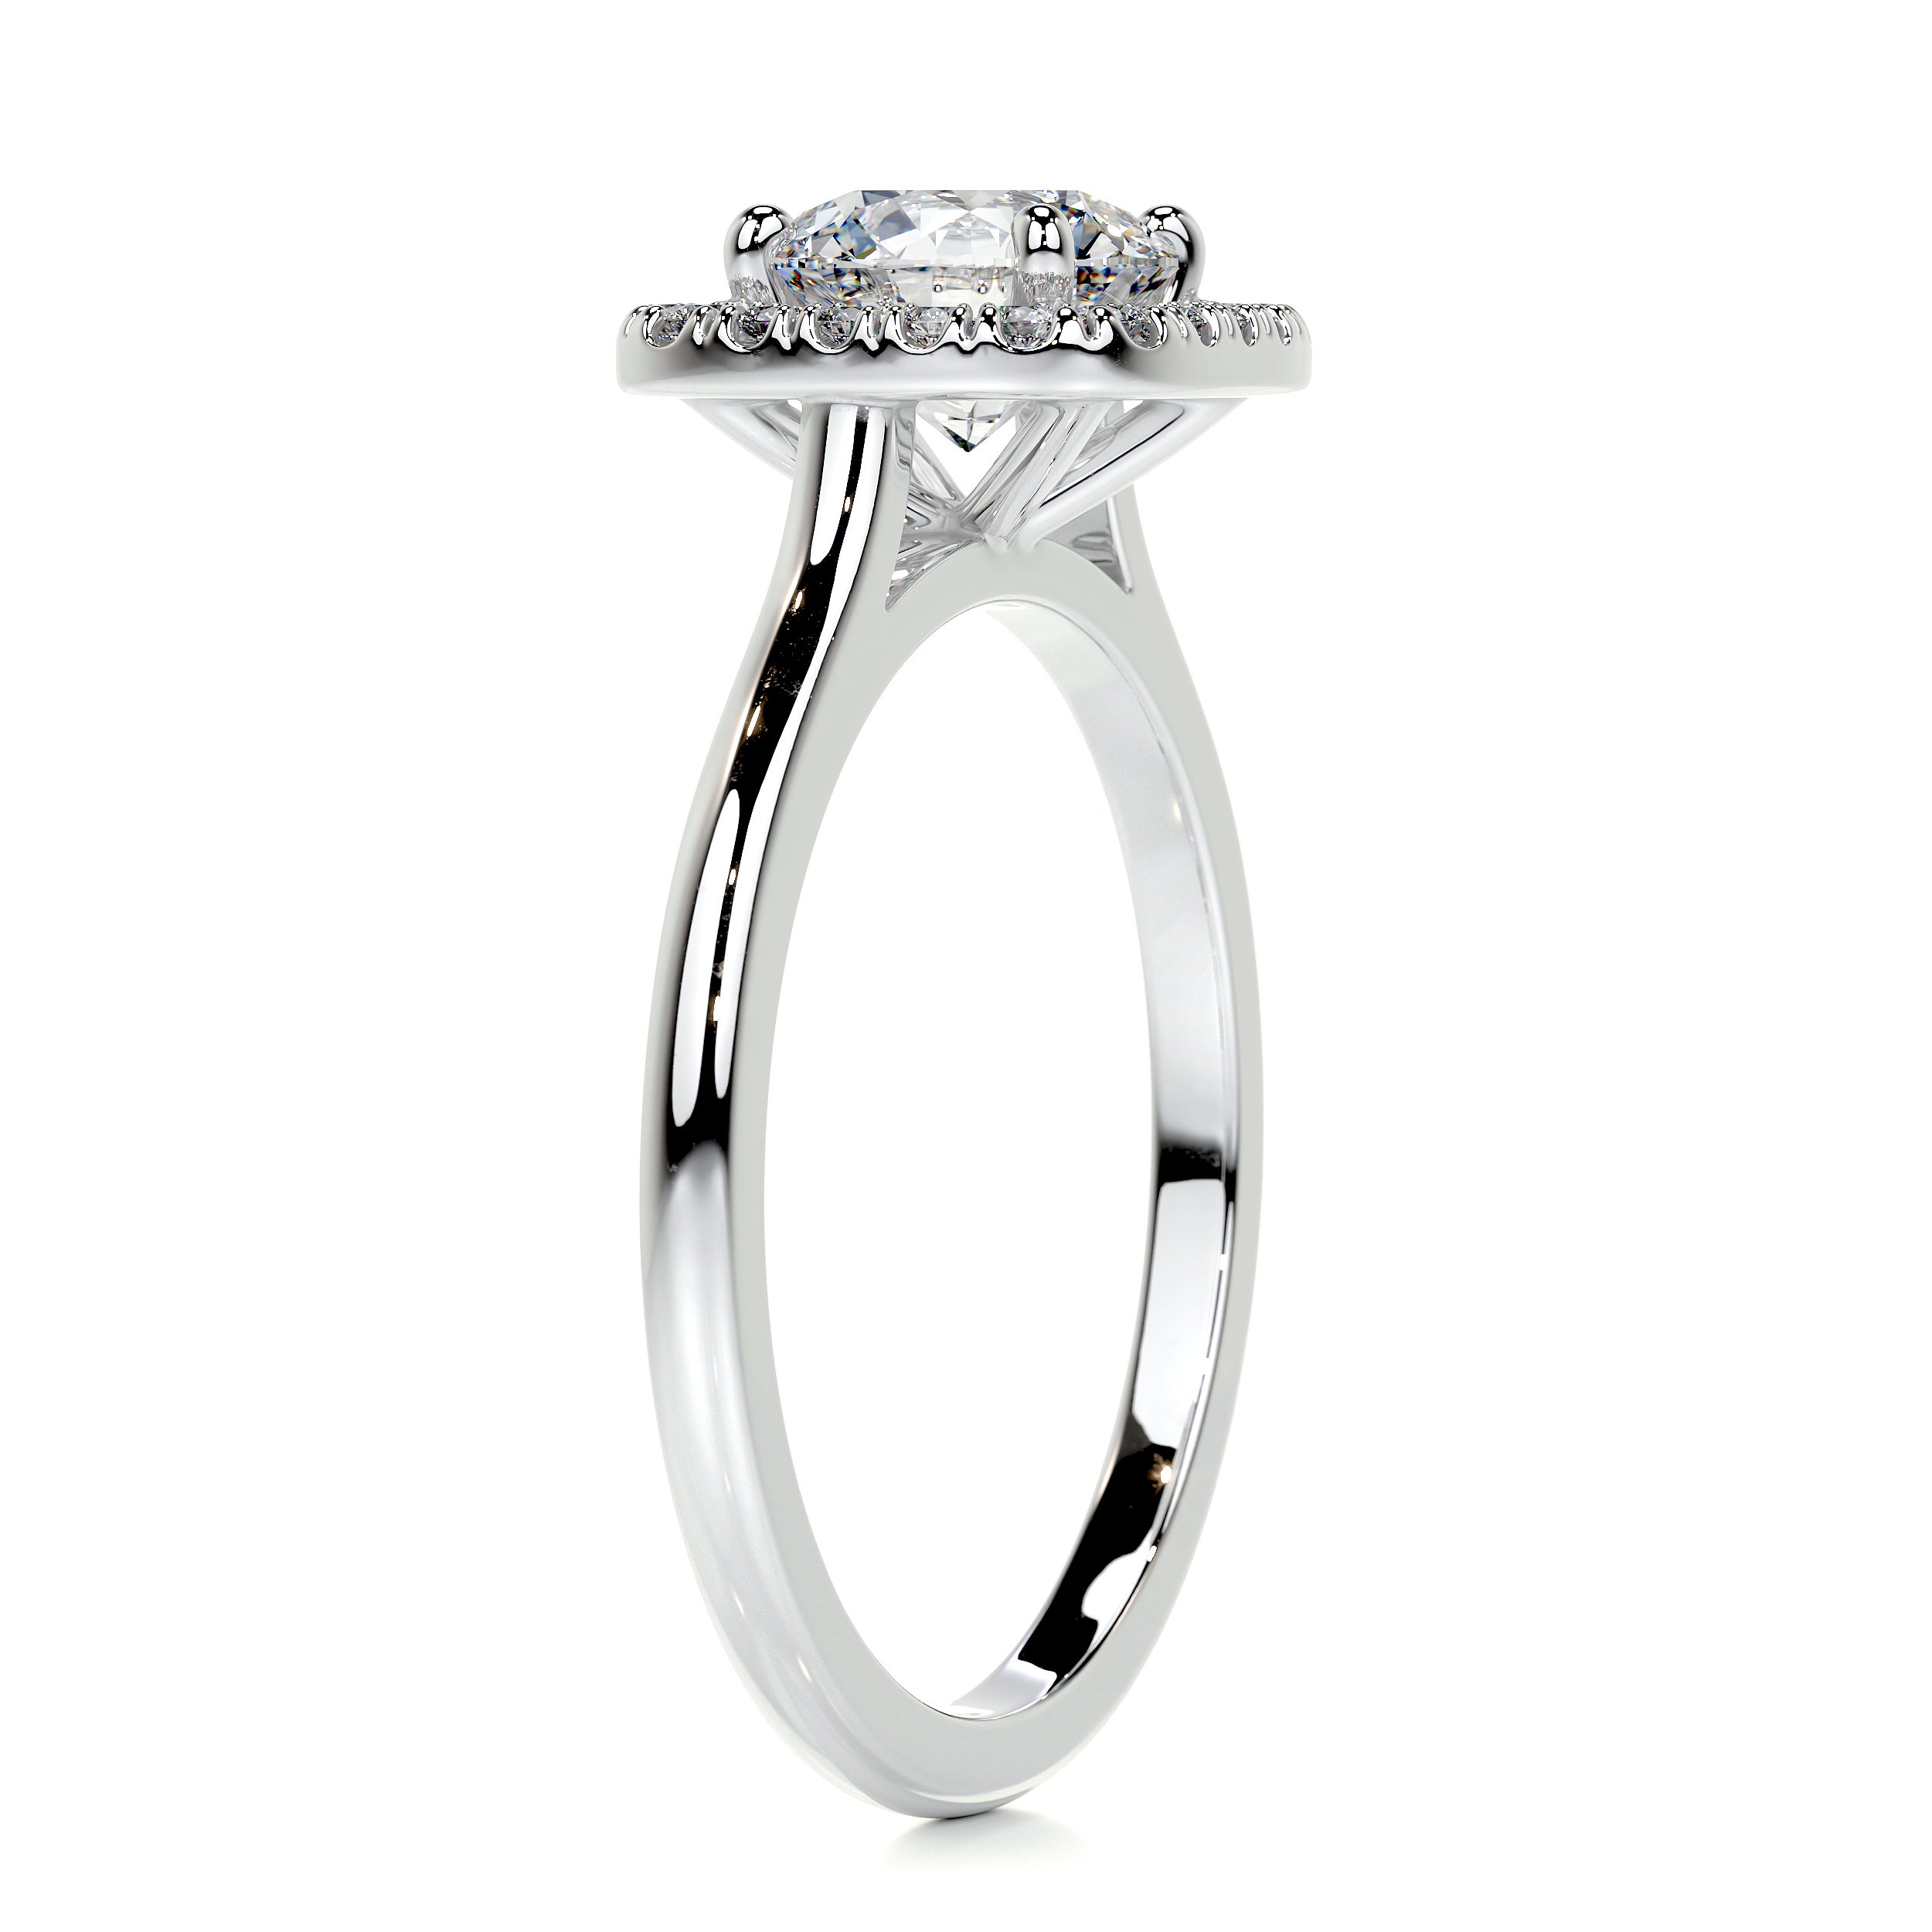 Claudia Diamond Engagement Ring   (1.15 Carat) -14K White Gold